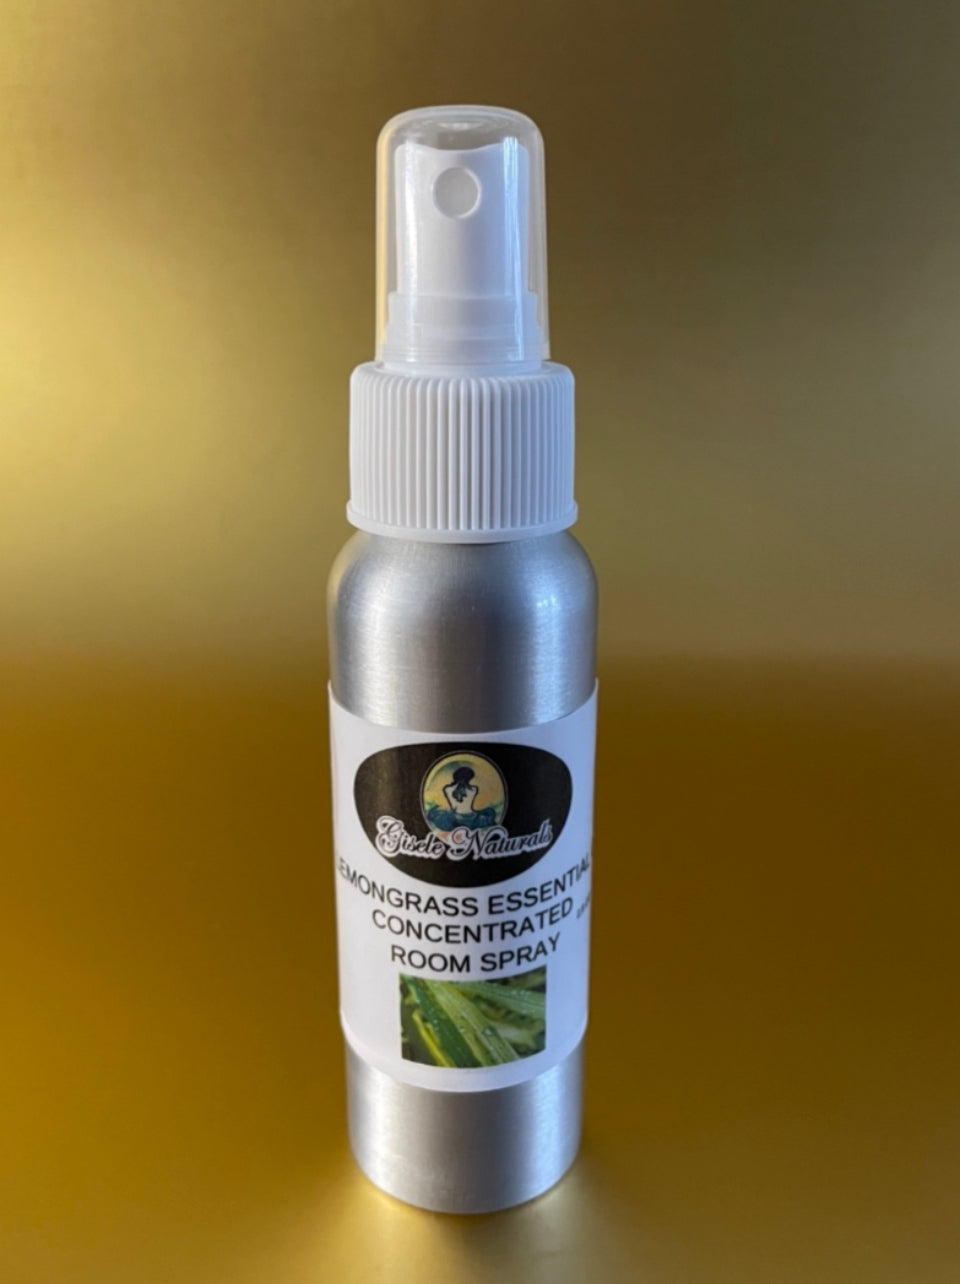 Lemongrass essential oil concentrated room spray